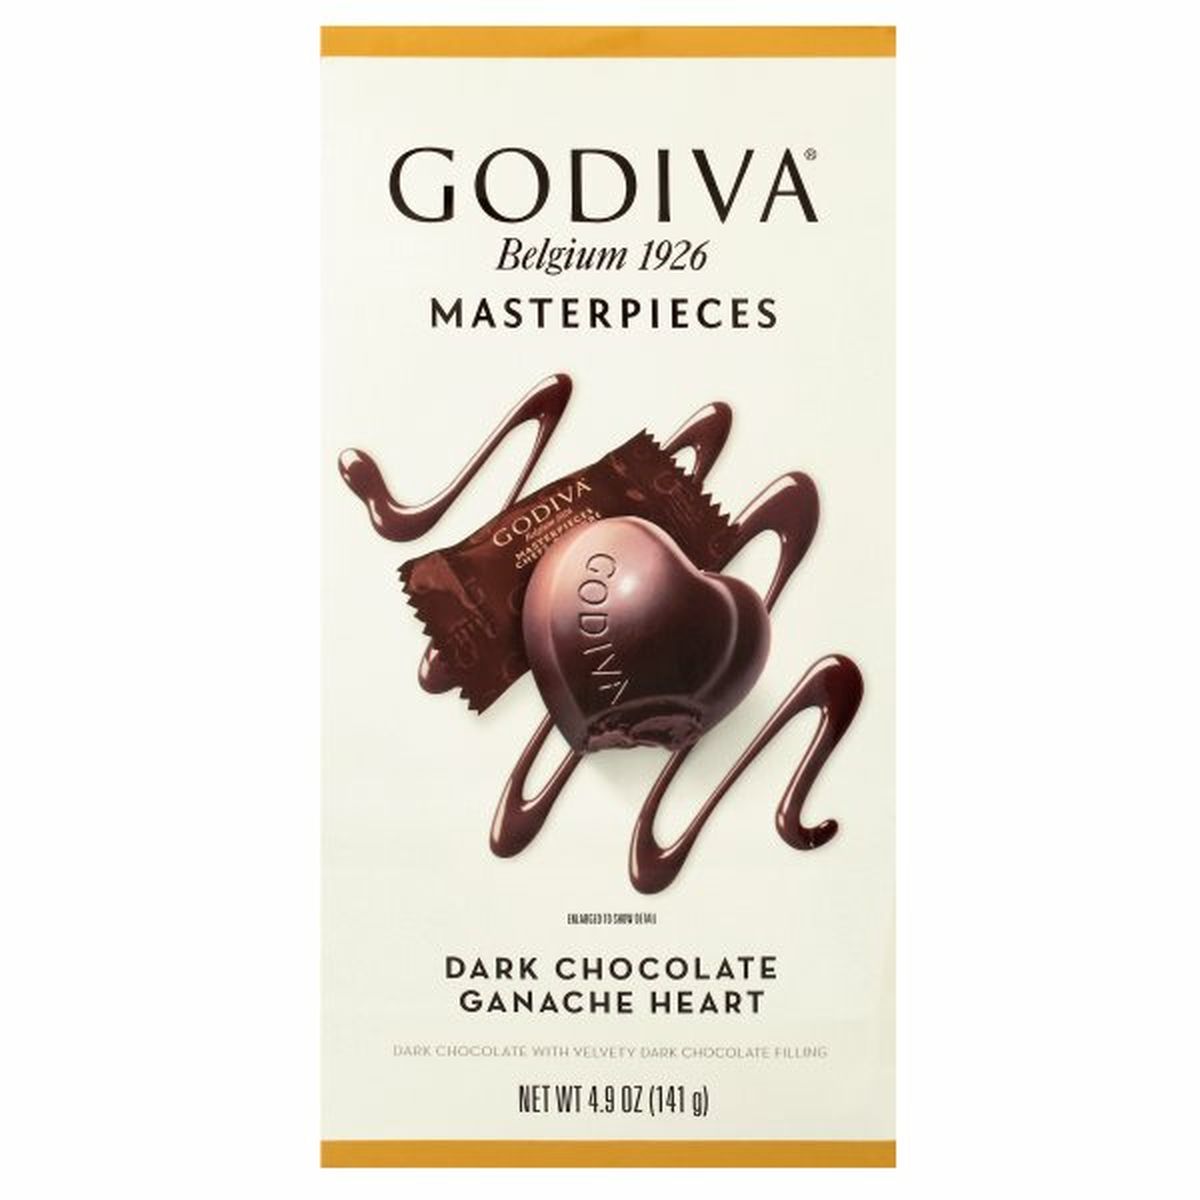 Calories in Godiva Dark Chocolate, Masterpieces, Ganache Heart